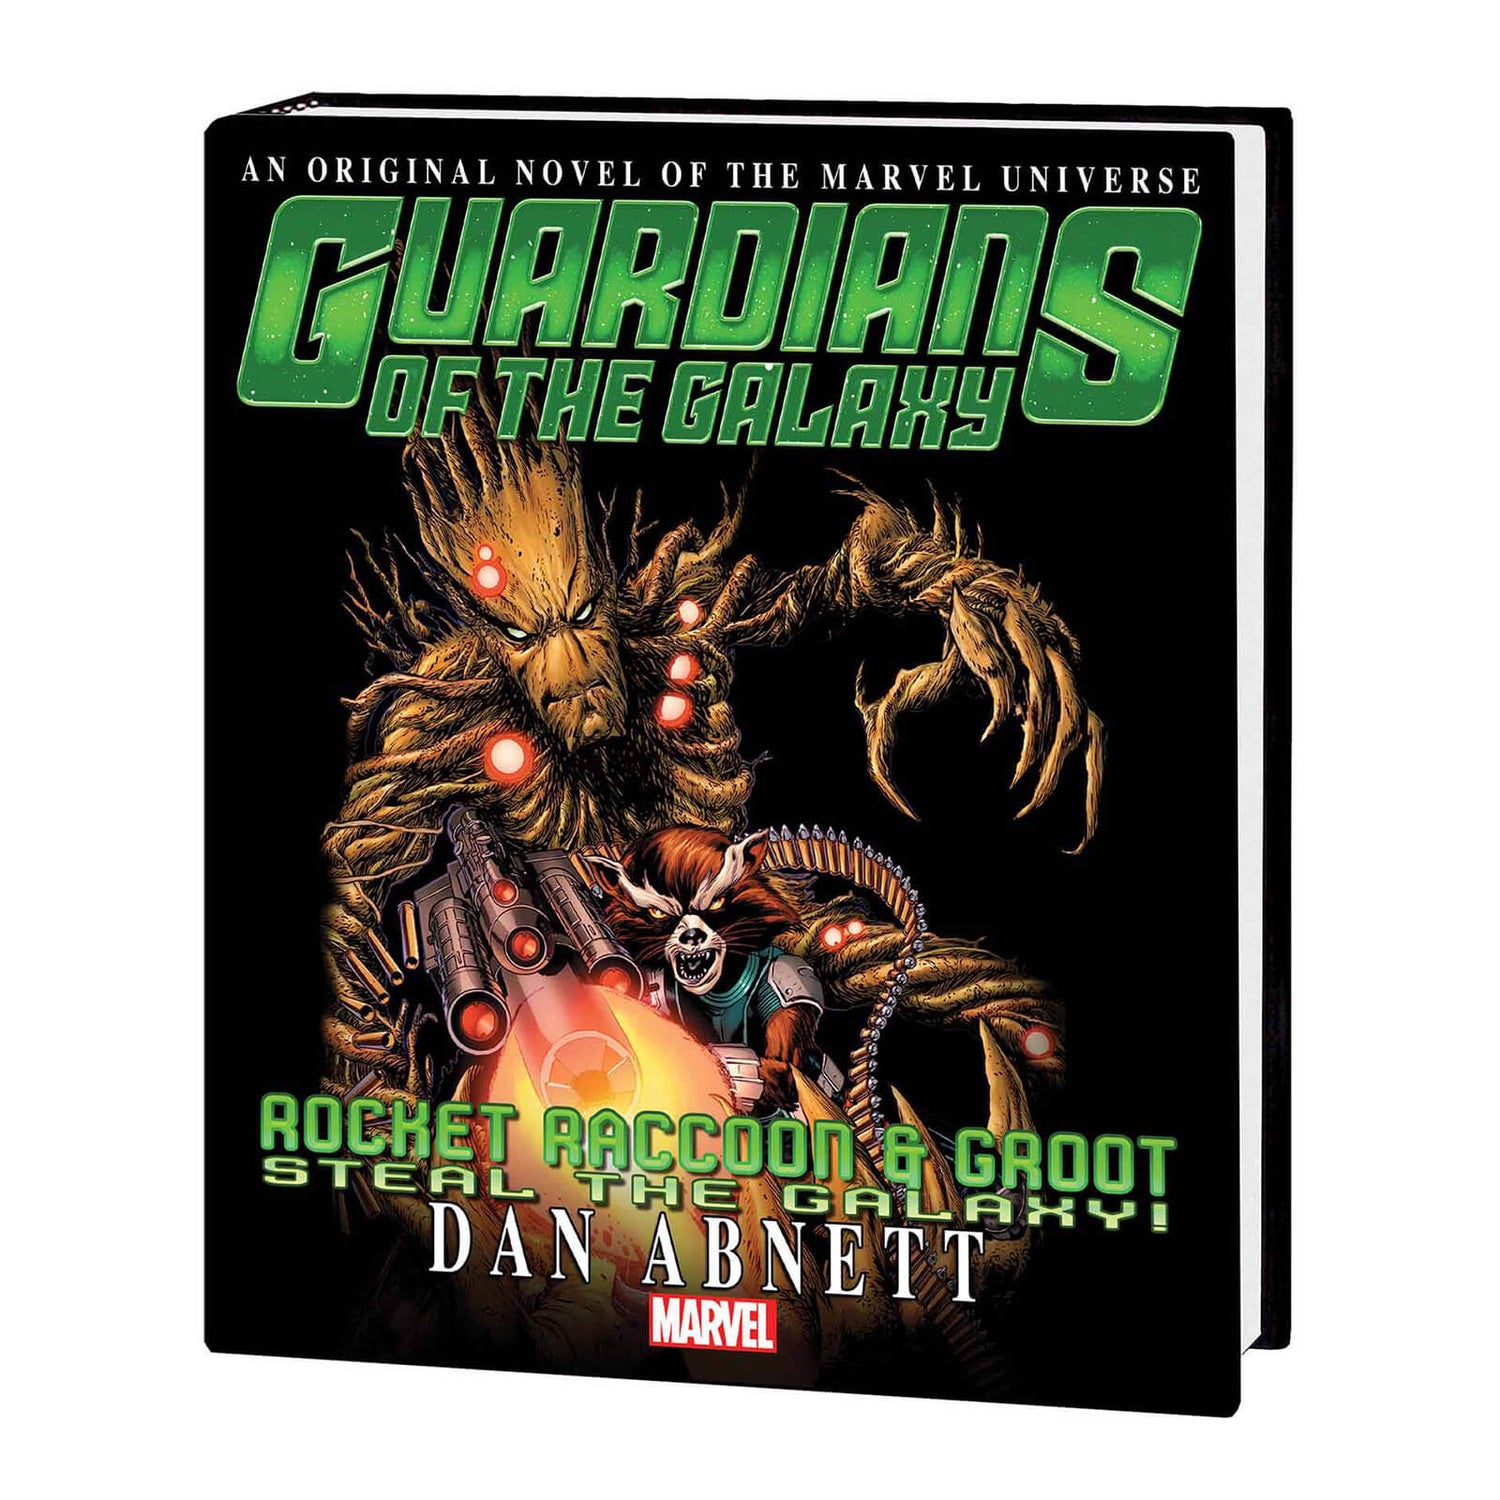 Les Gardiens de la Galaxie de Marvel : Rocket Raccoon et Groot volent la galaxie ! Roman graphique